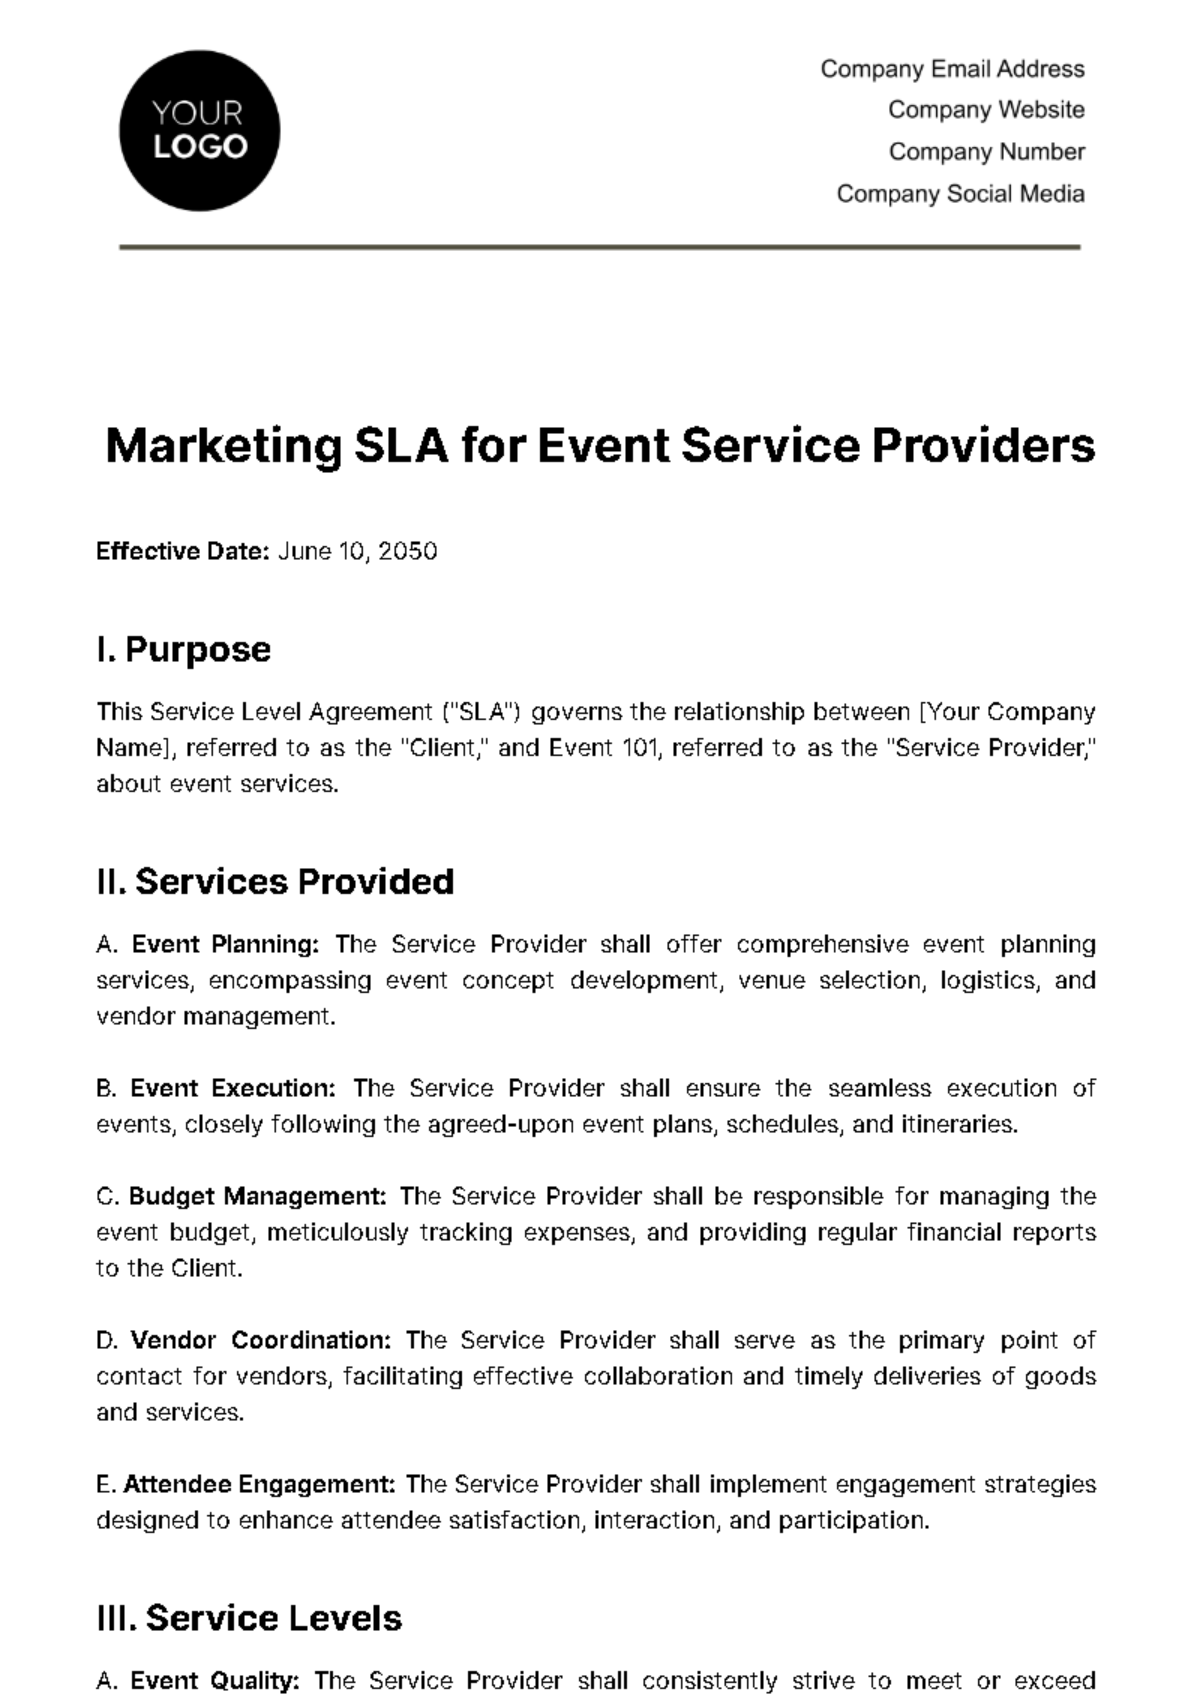 Free Marketing SLA for Event Service Providers Template